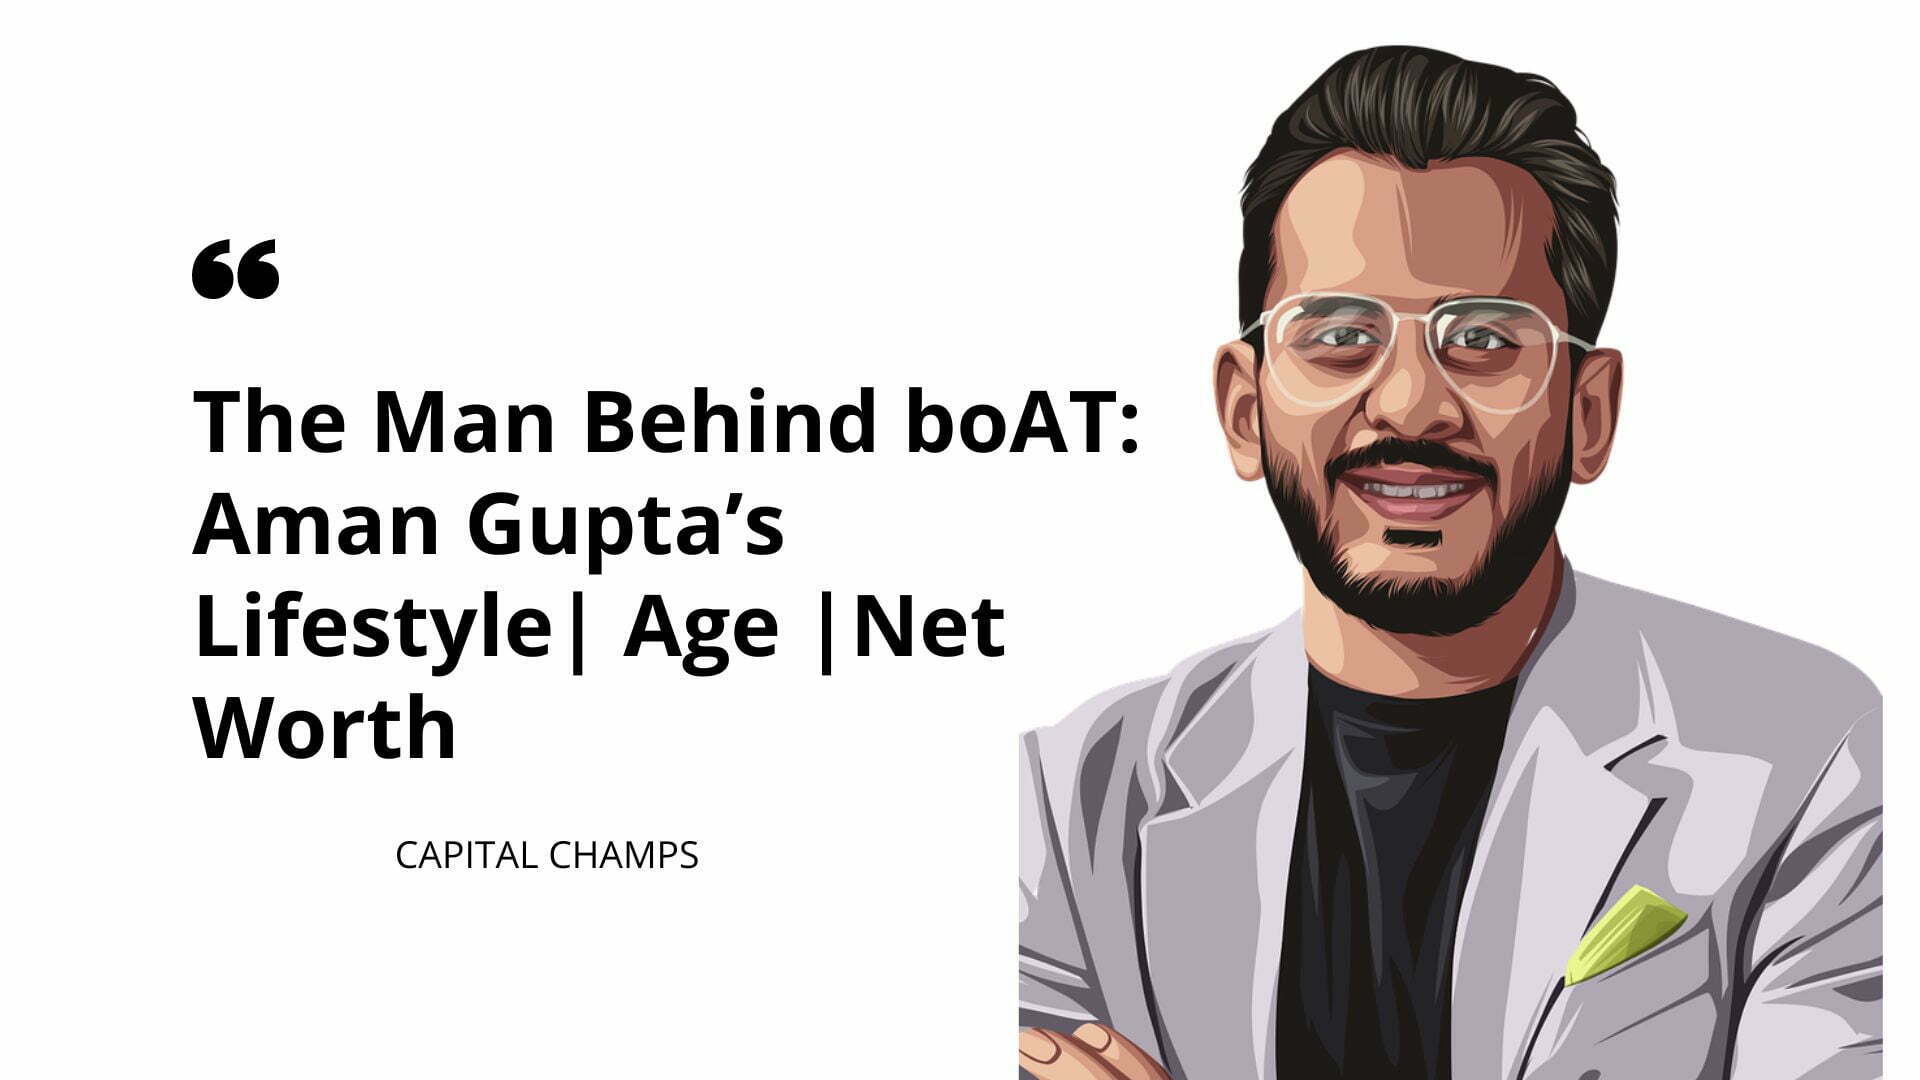 The Man Behind boAT: Aman Gupta’s Lifestyle| Age |Net Worth